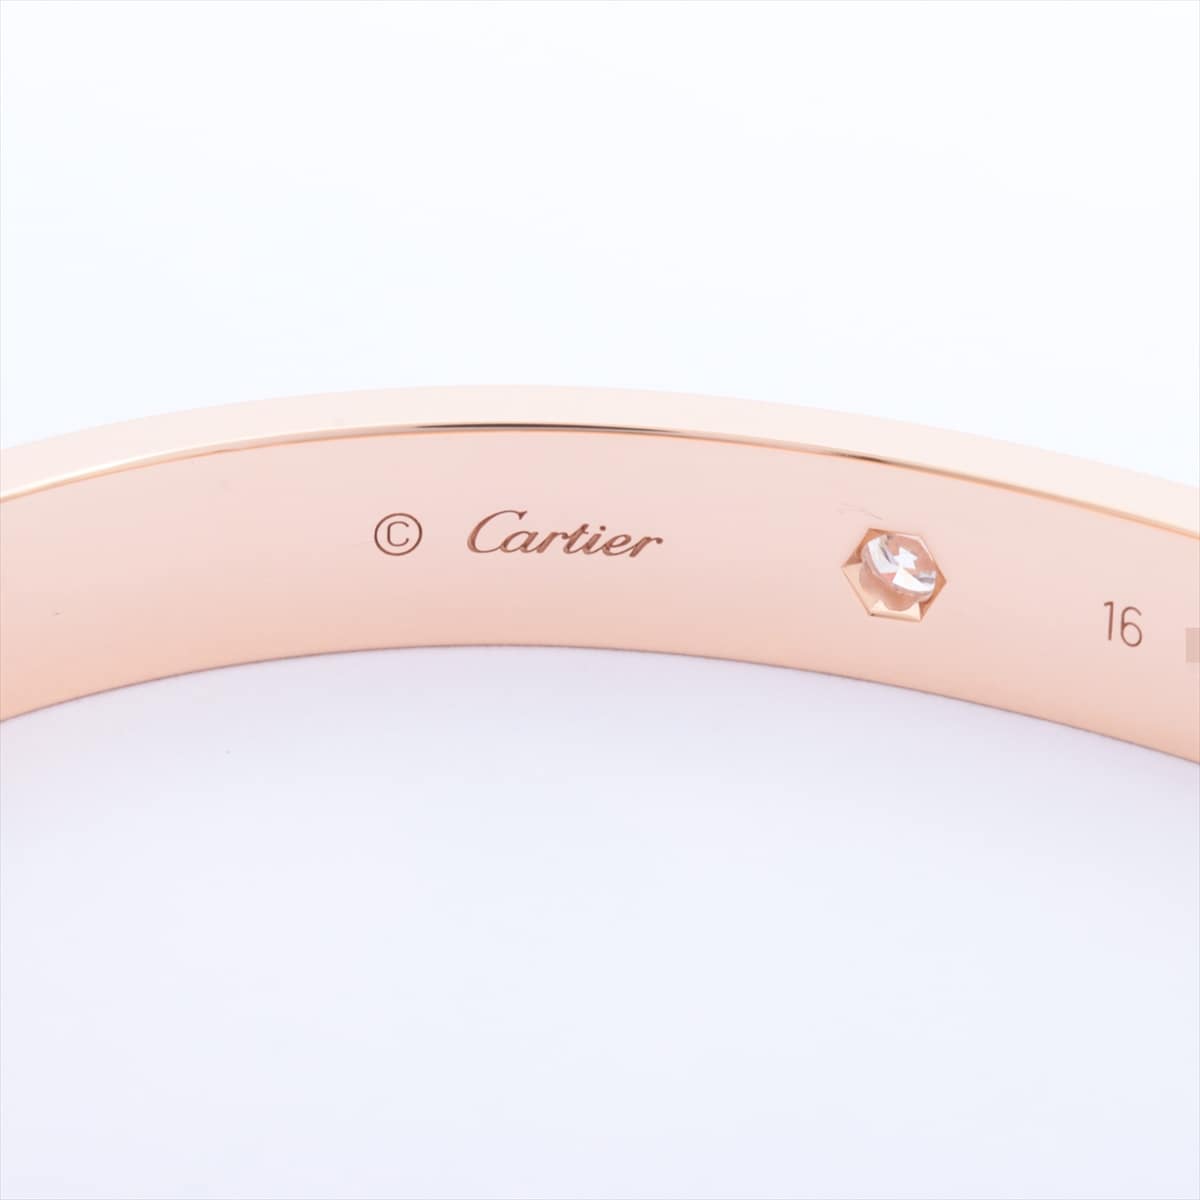 Cartier Love half diamond Bracelet 750 PG 31.0g 16